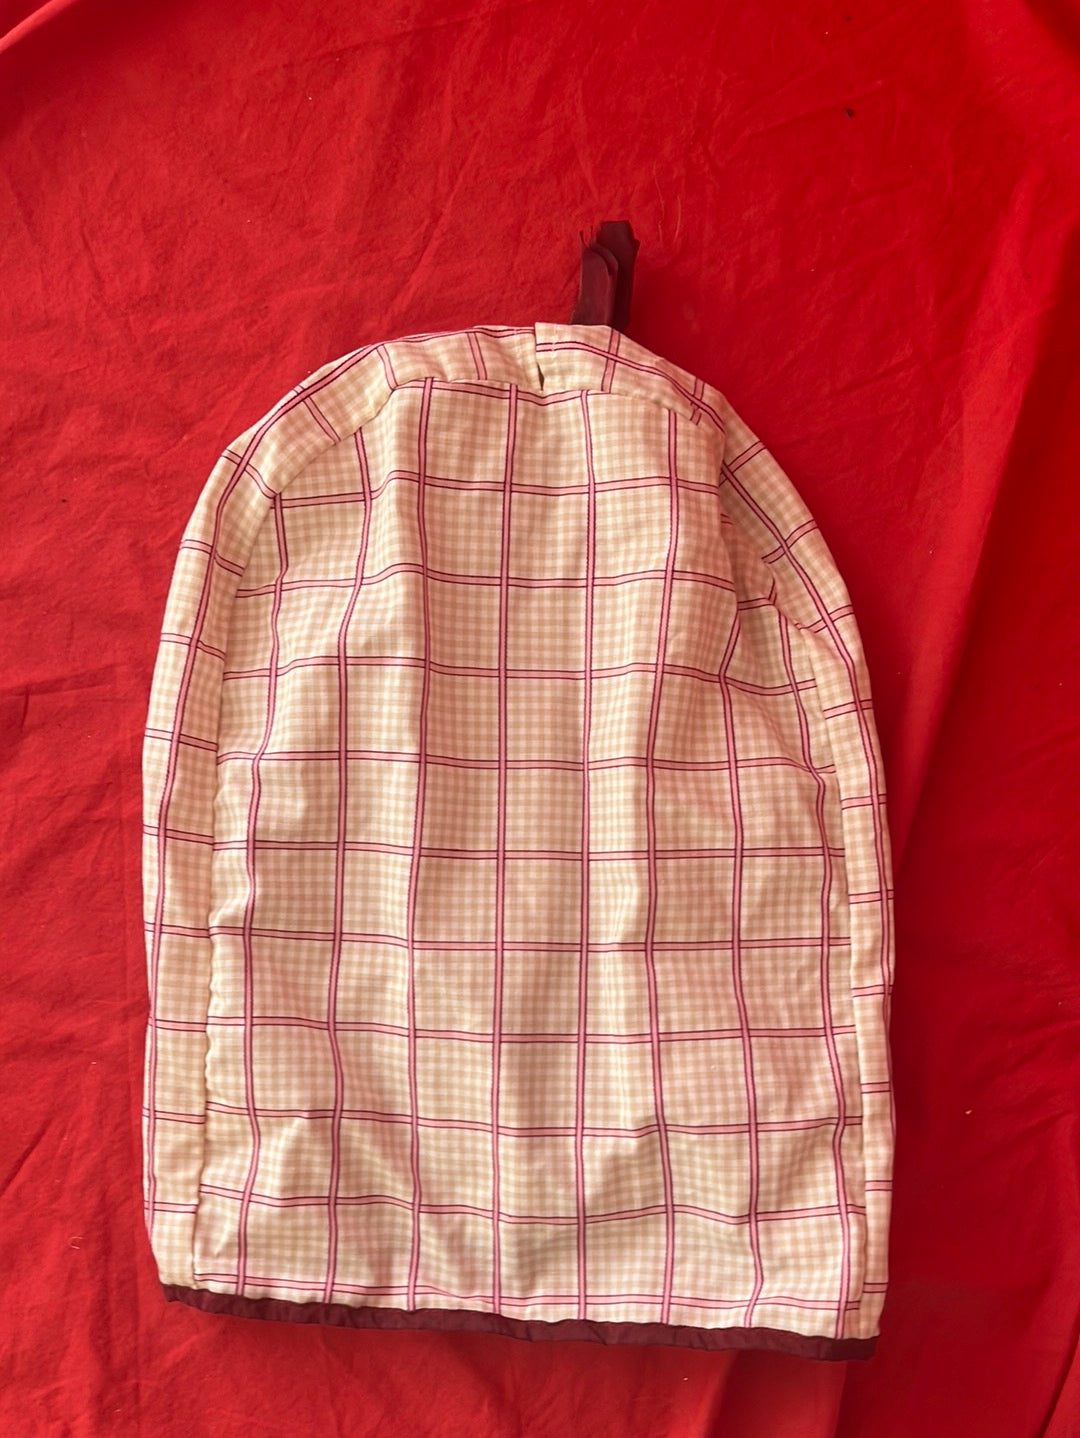 VTG -- 1989 PLEASANT COMPANY American Girl Samantha's Garment Bag